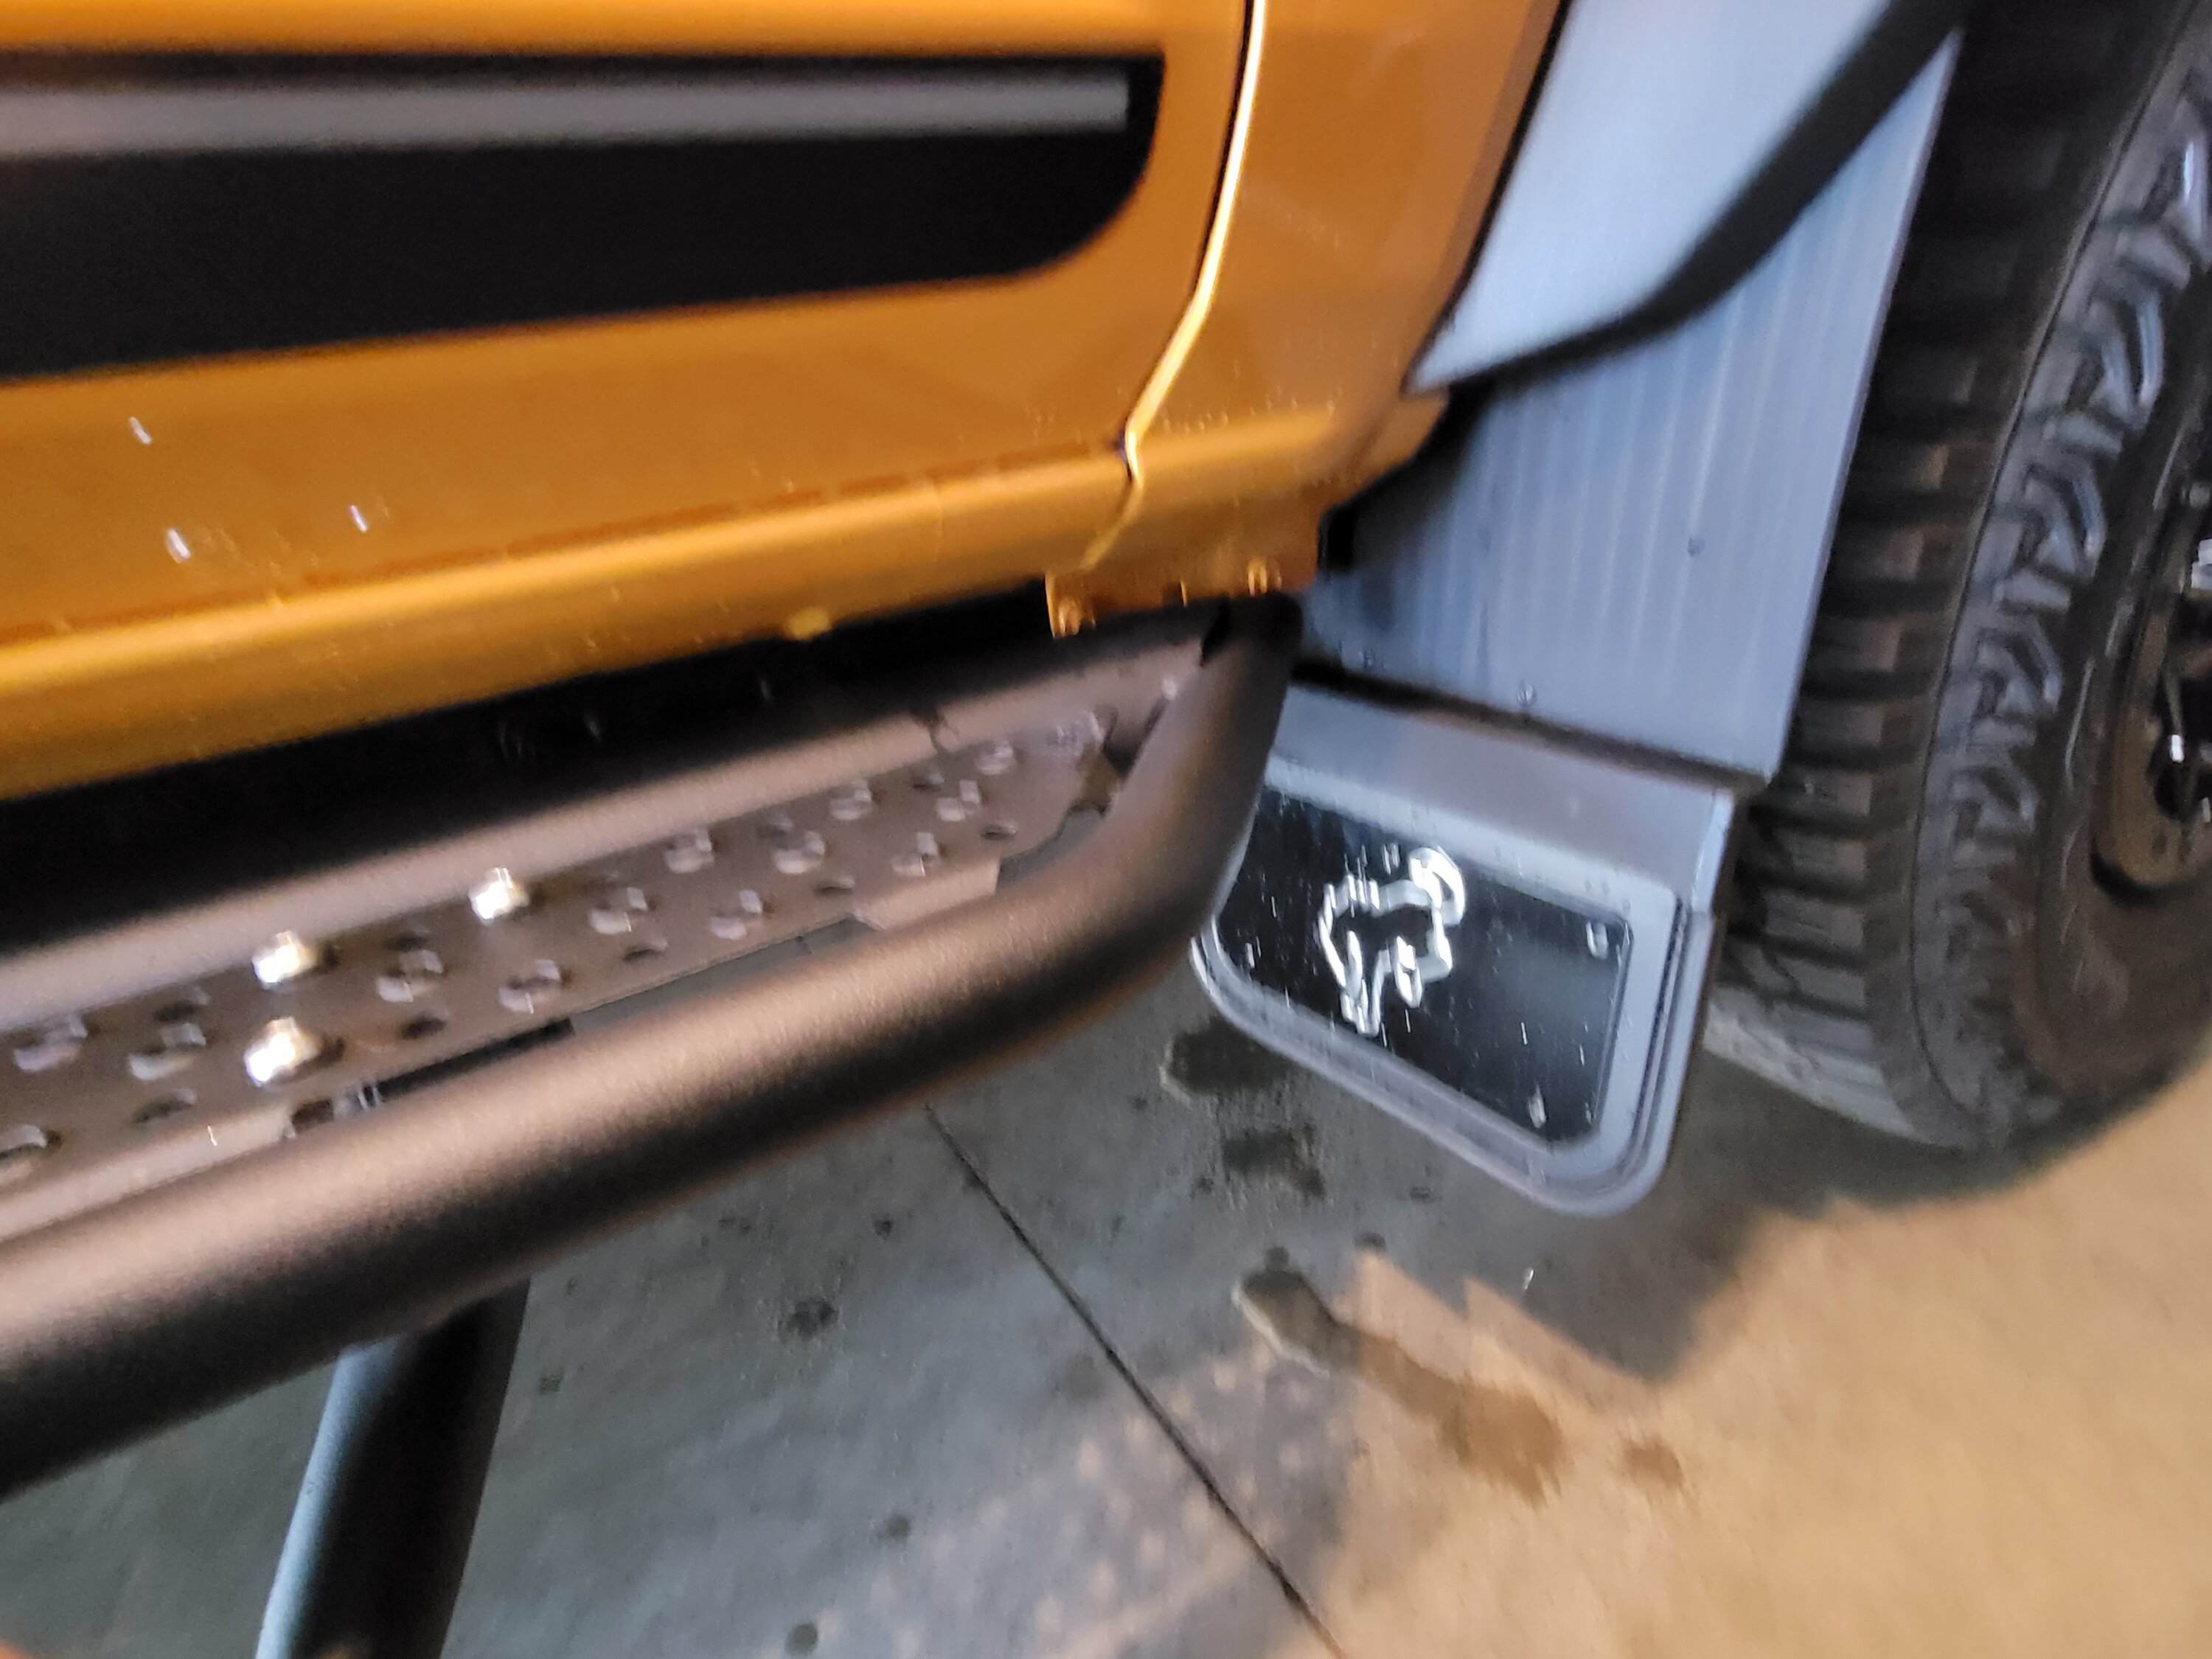 Ford Bronco Mud Flaps: RokBlokz vs RekGen vs Mabett vs WeatherTech ? 20211230_133809